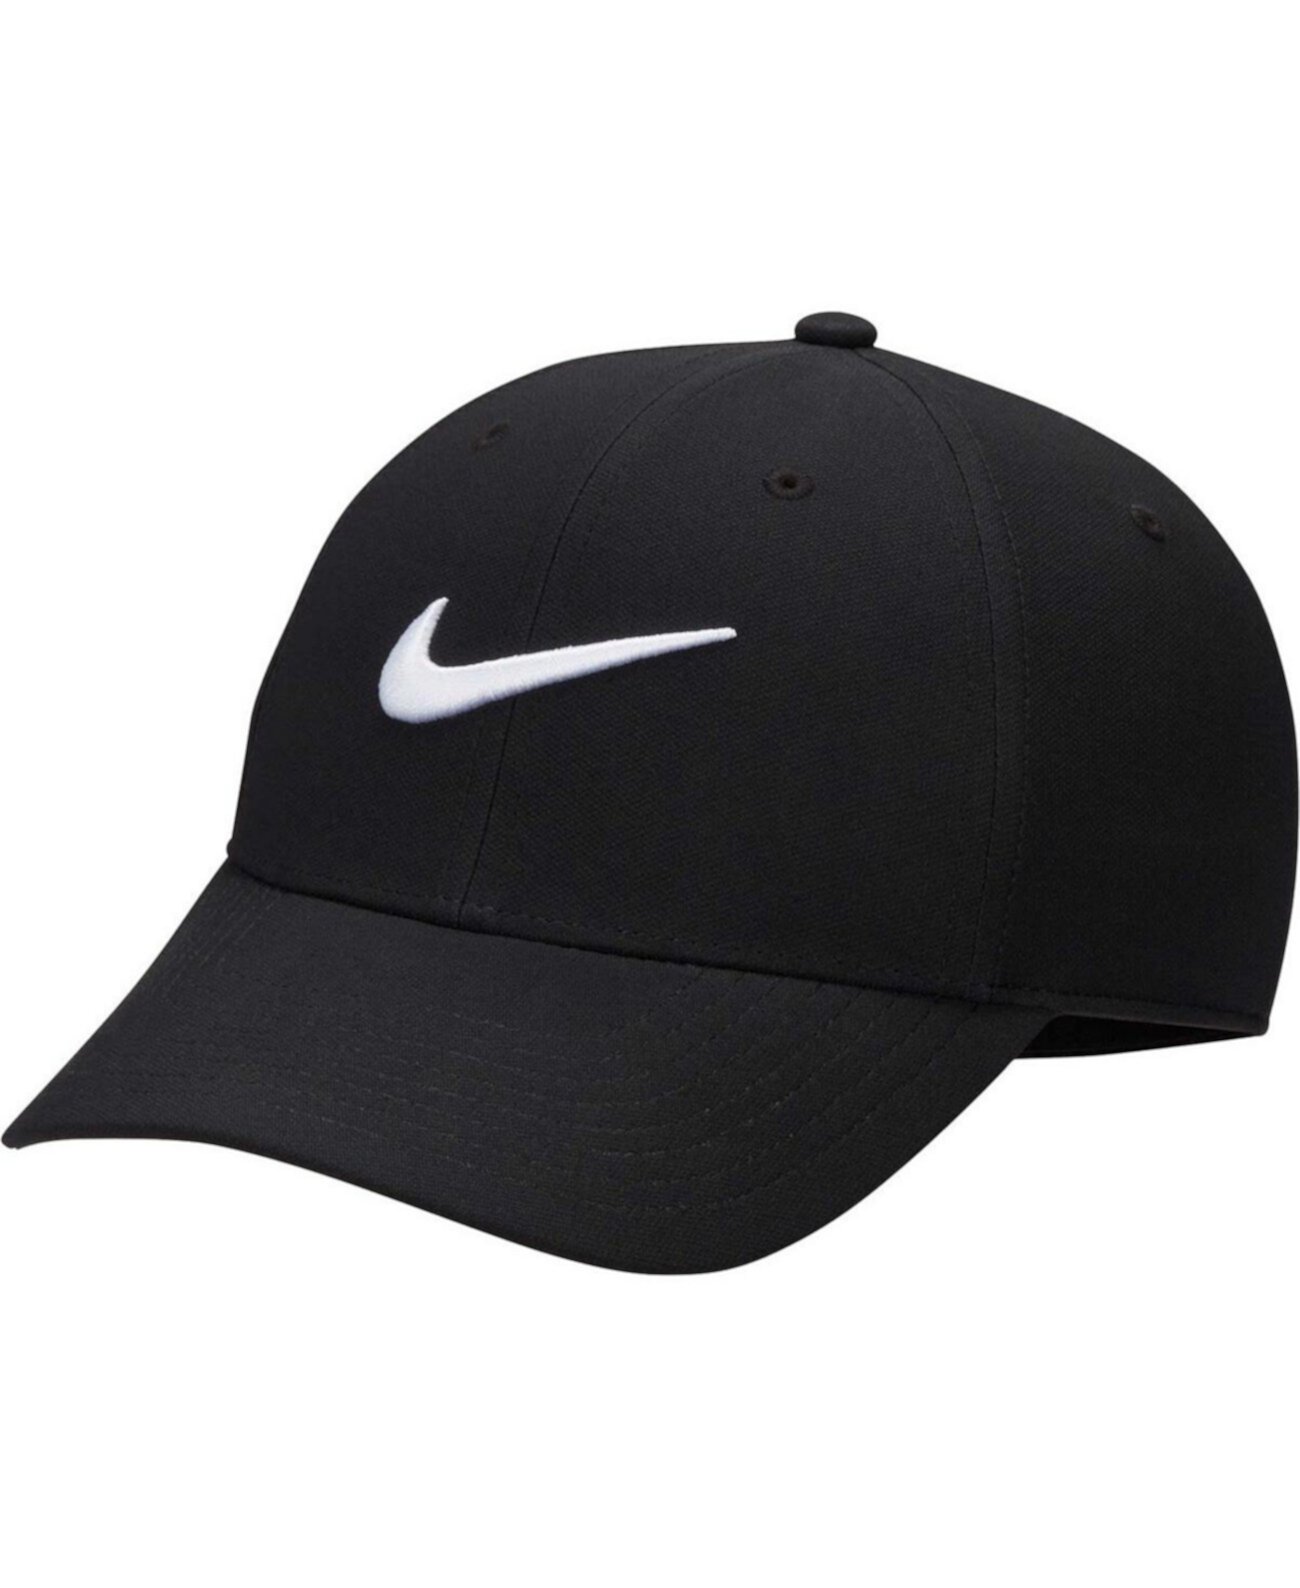 Мужская регулируемая шапка Club Performance Nike